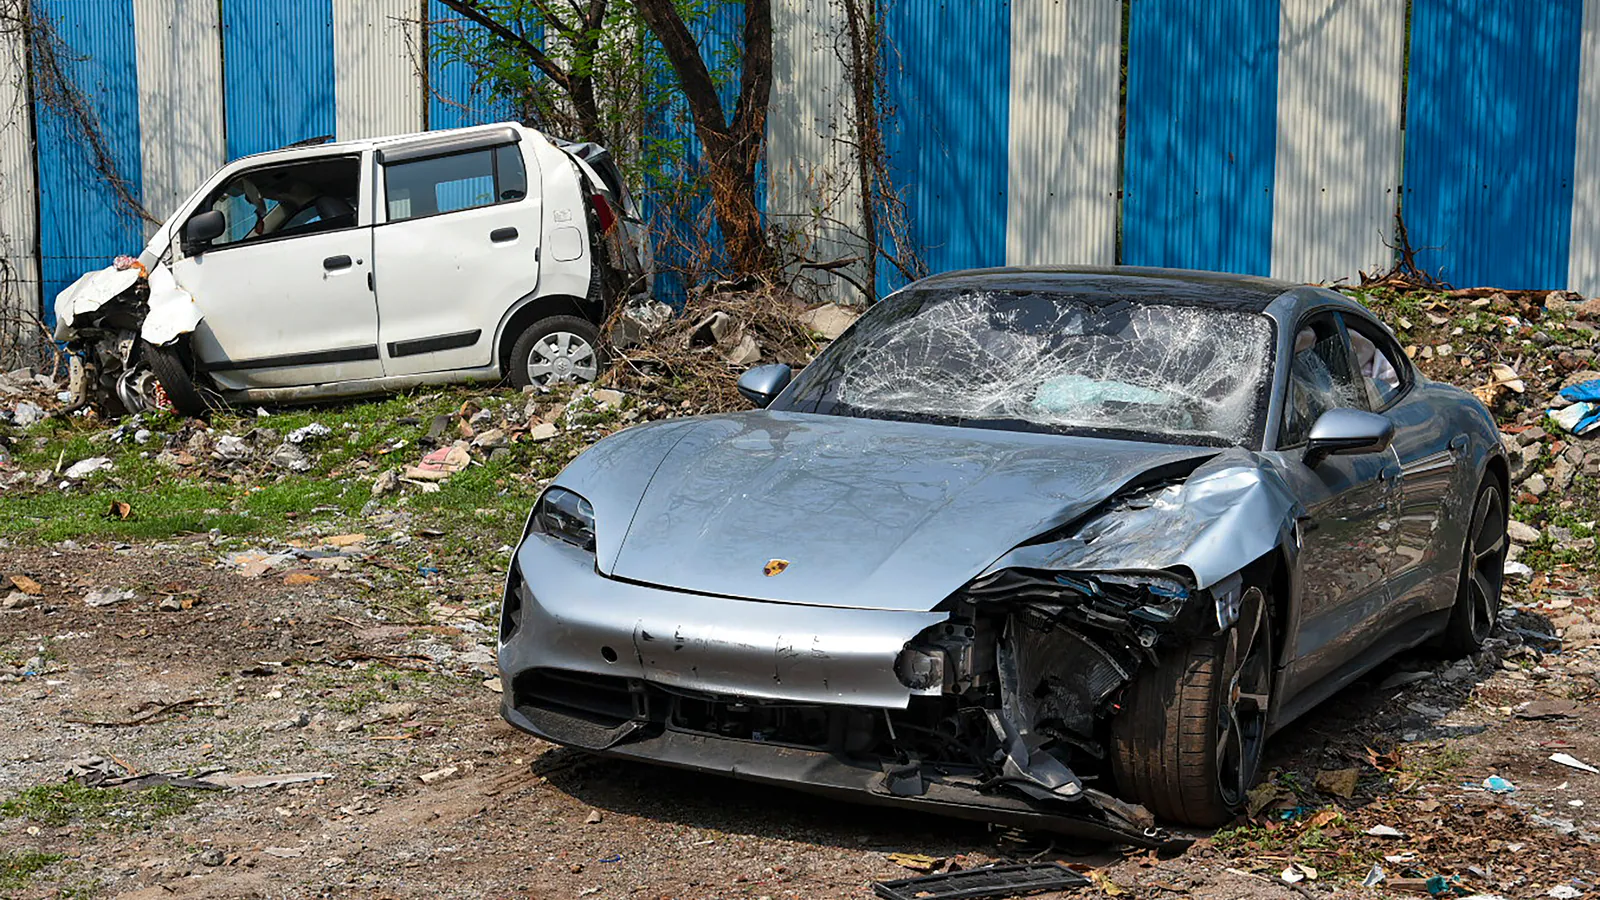 Pune Porsche Crash Scandal: CCTV Shows Hospital Staff in Bribery Scandal